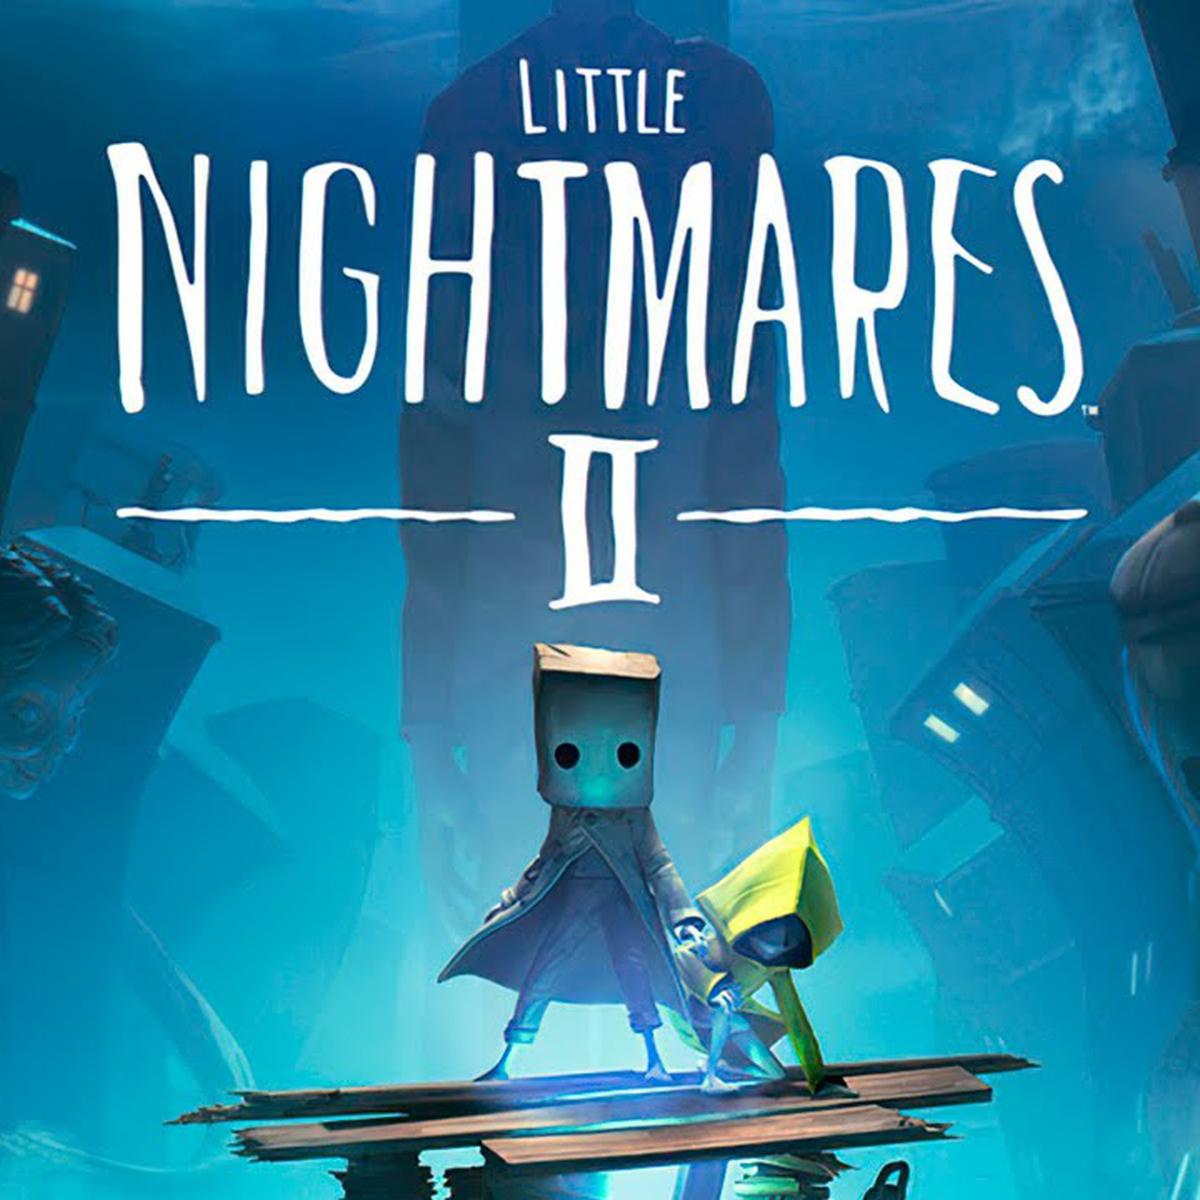 Compra Little Nightmares II en la tienda Humble